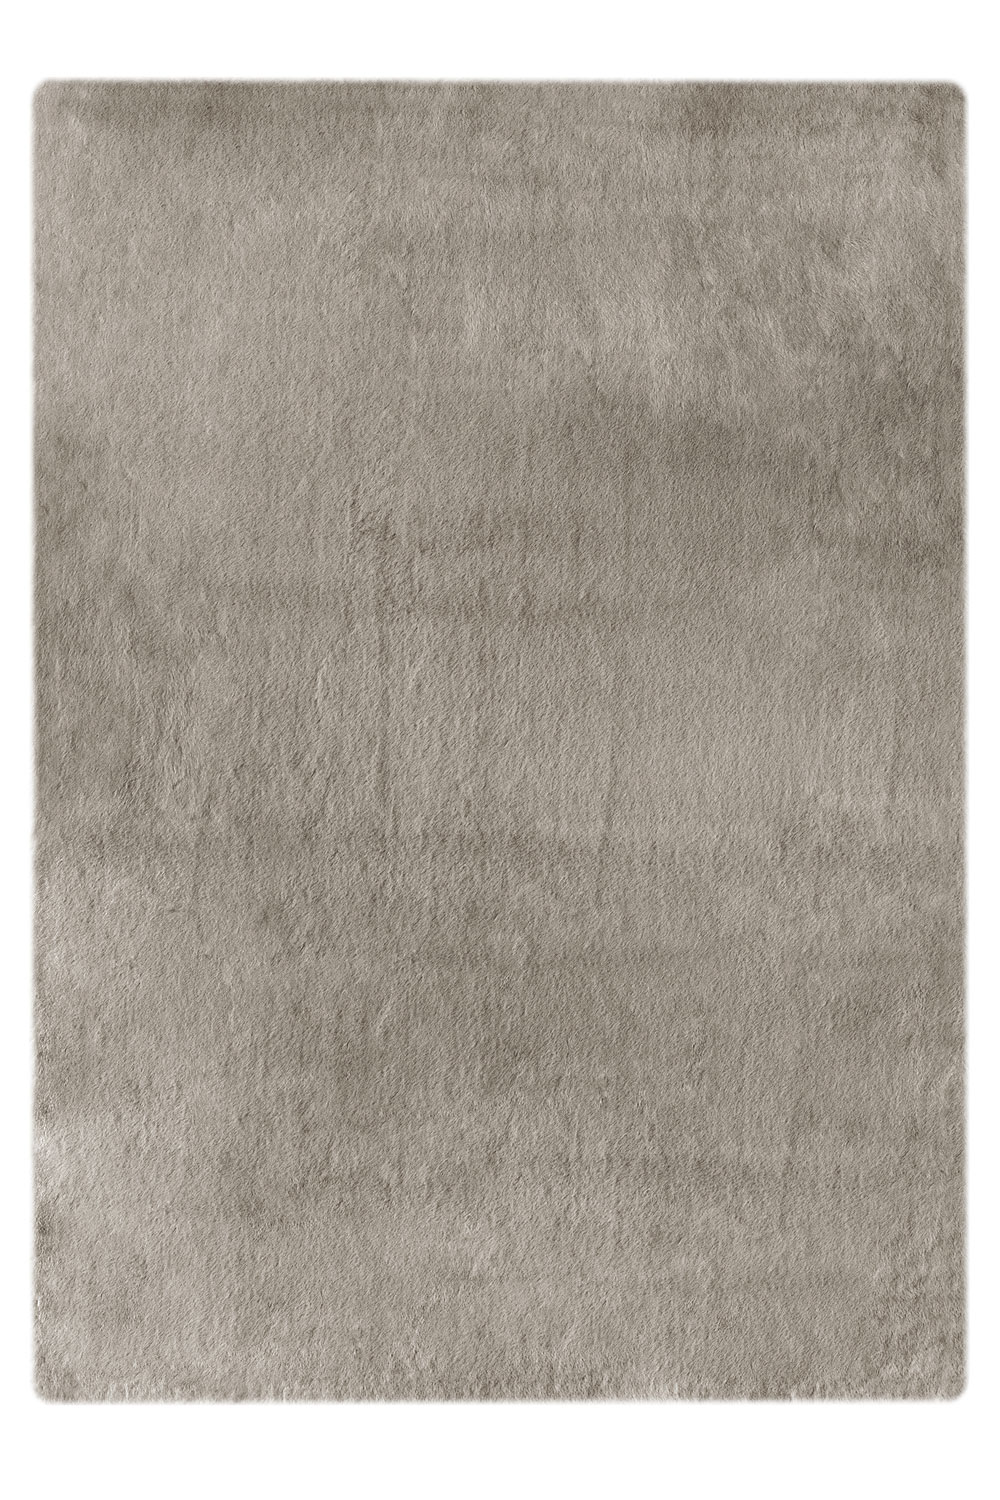 Kusový koberec HEAVEN 800 Taupe 200x290 cm